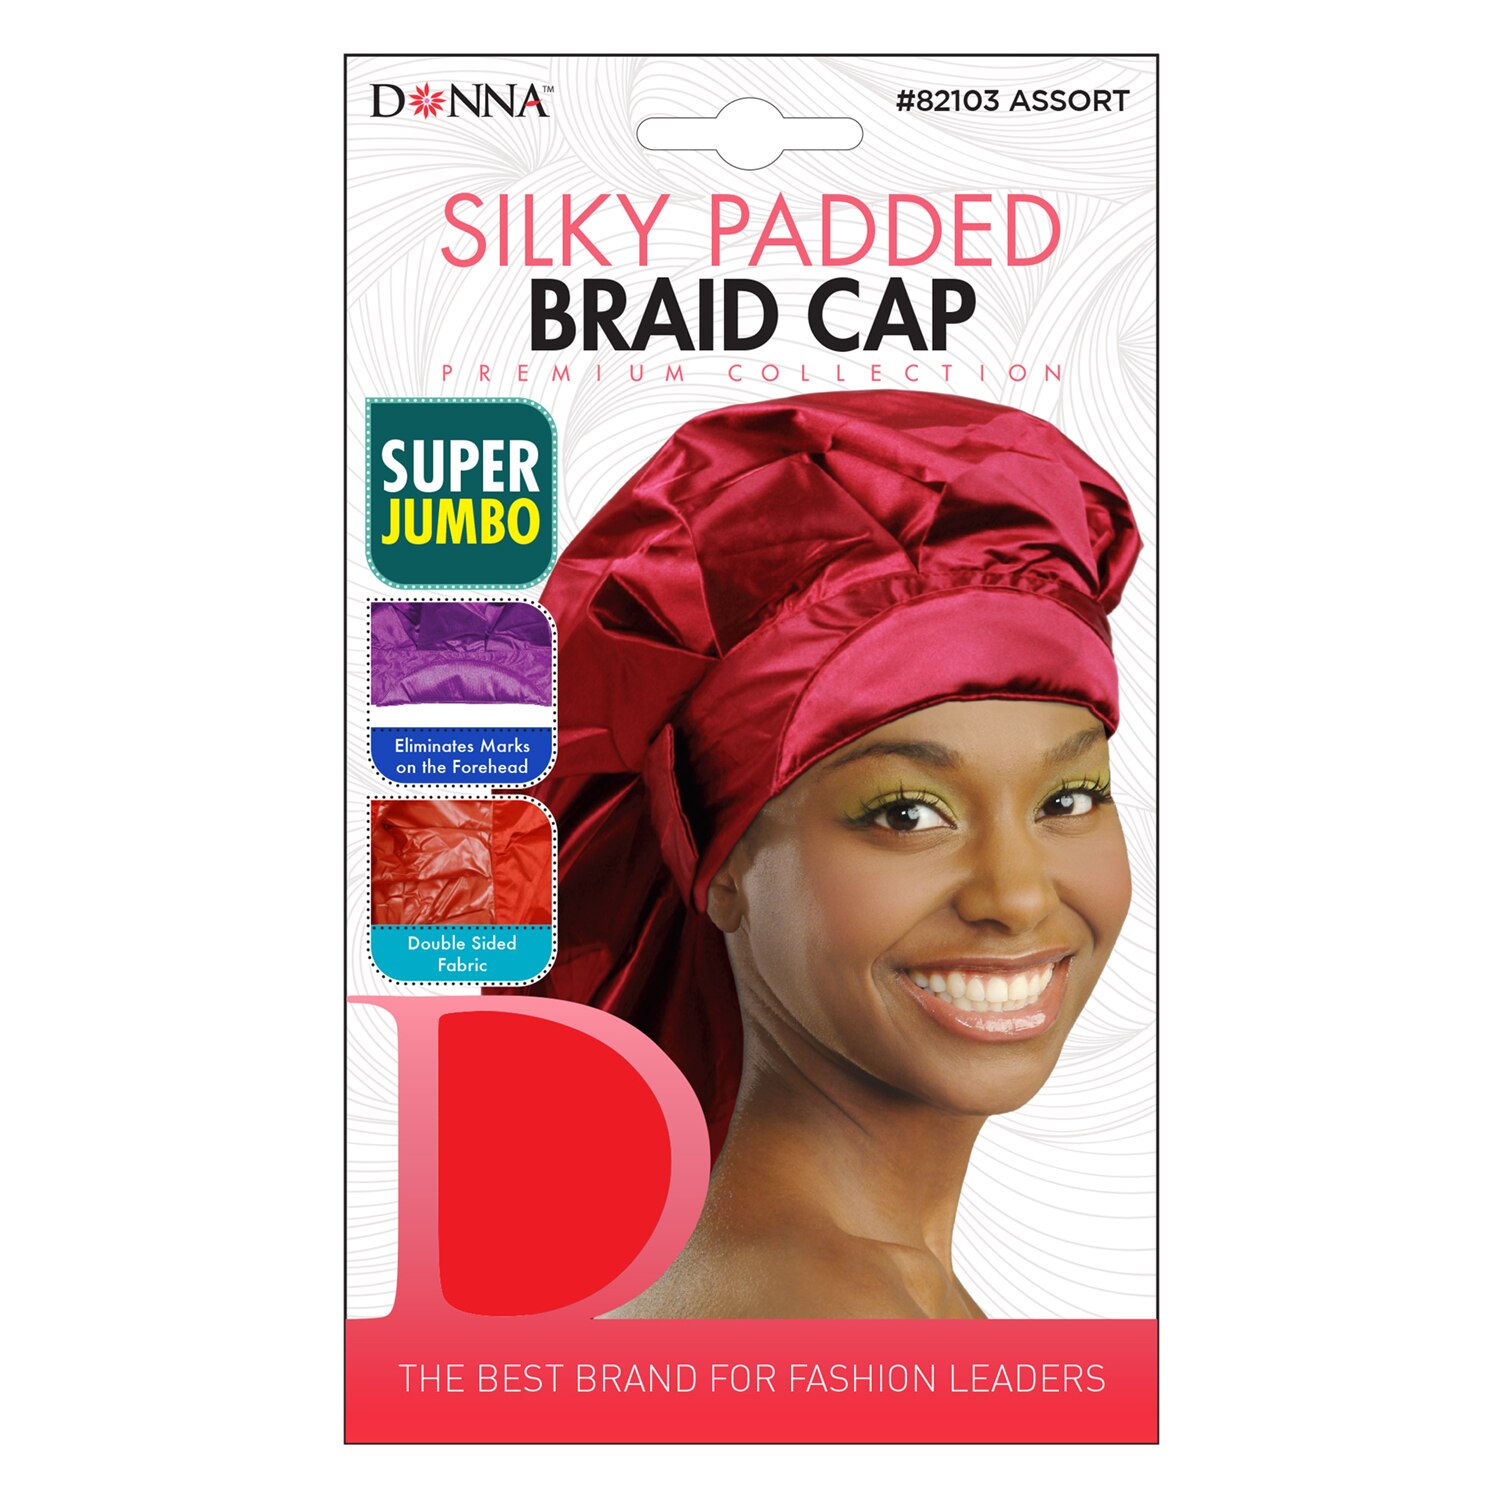 Donna Super Jumbo Silky Padded Braid Cap